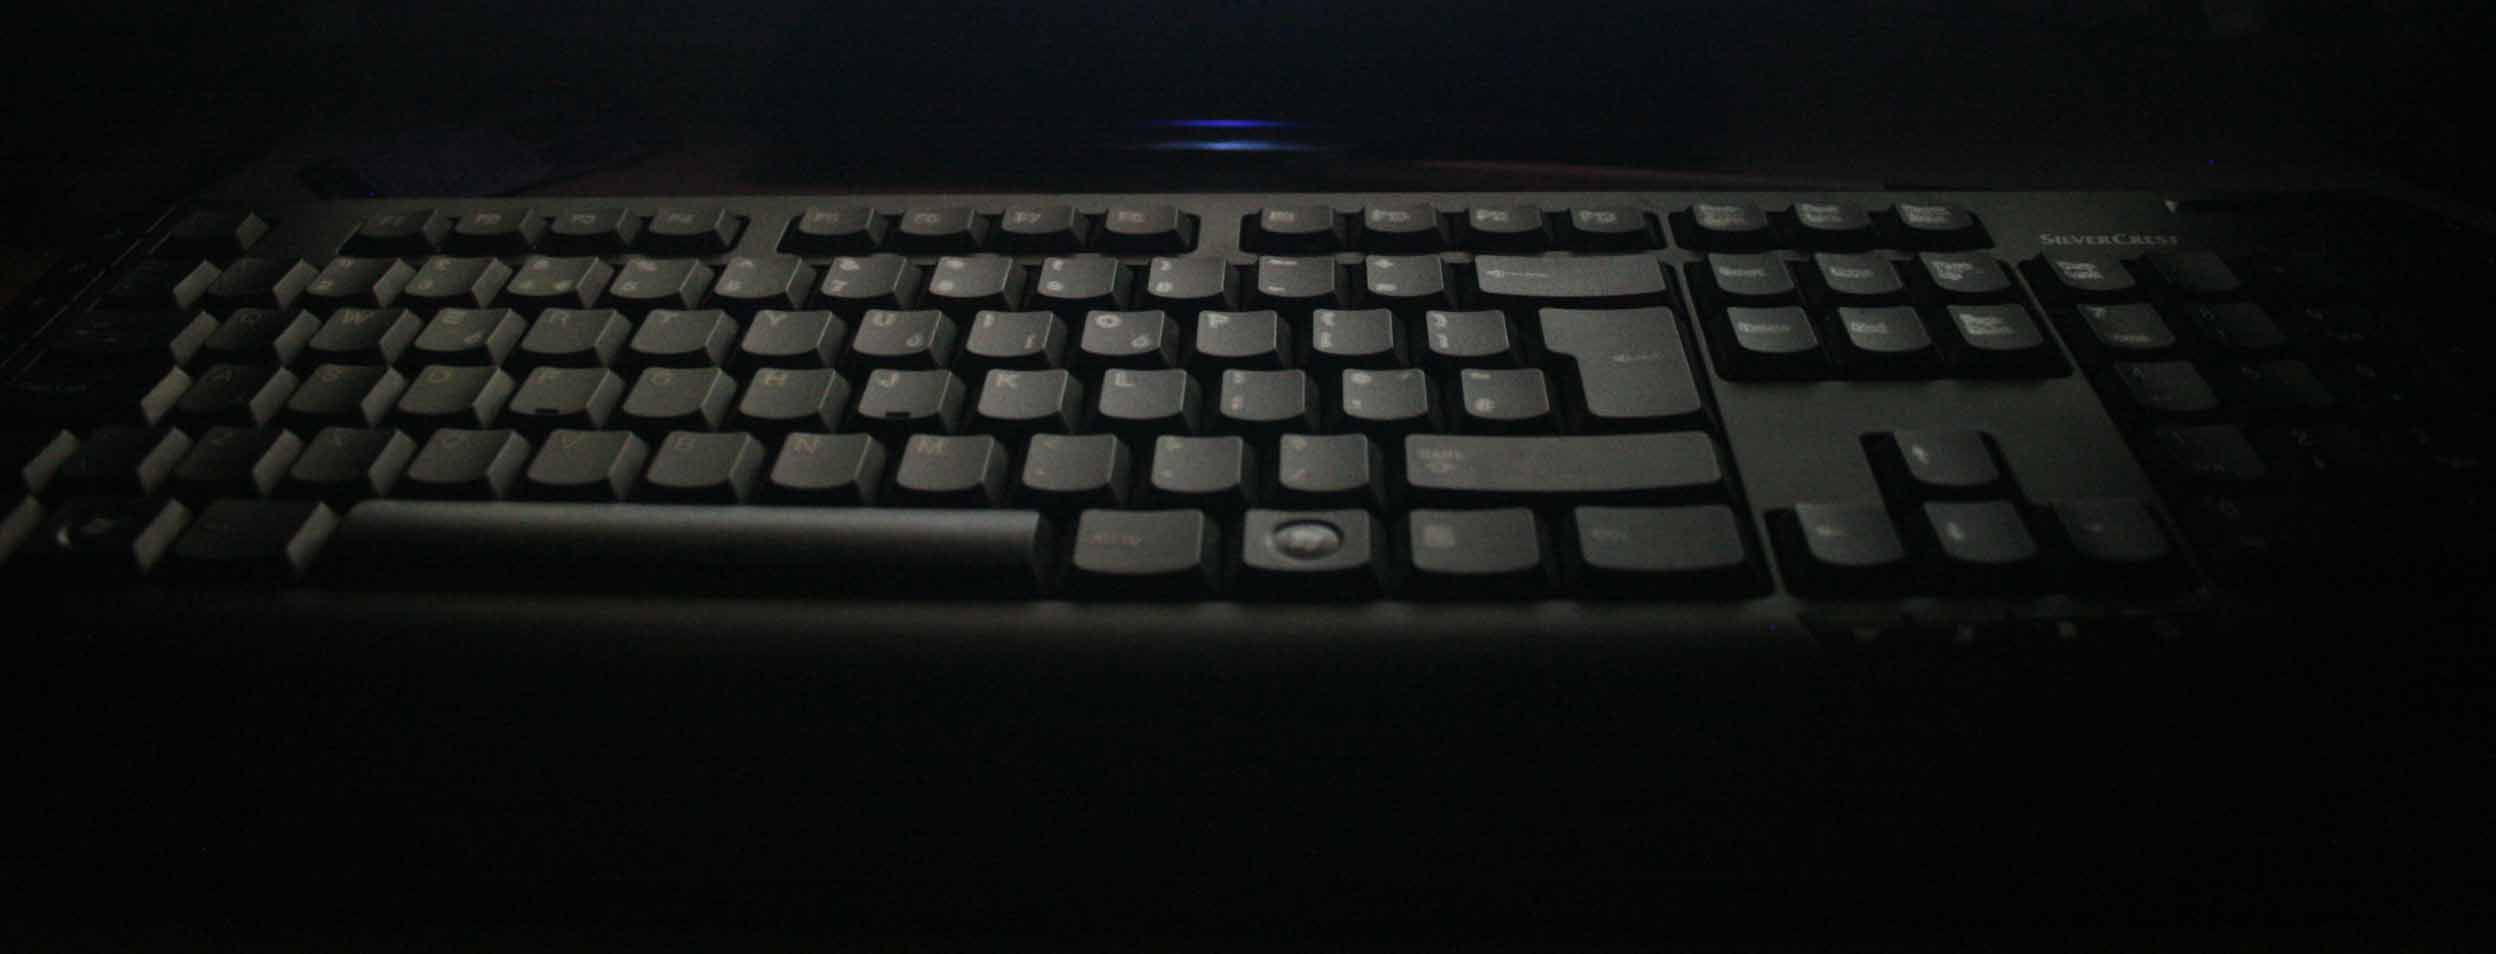 A normal keyboard